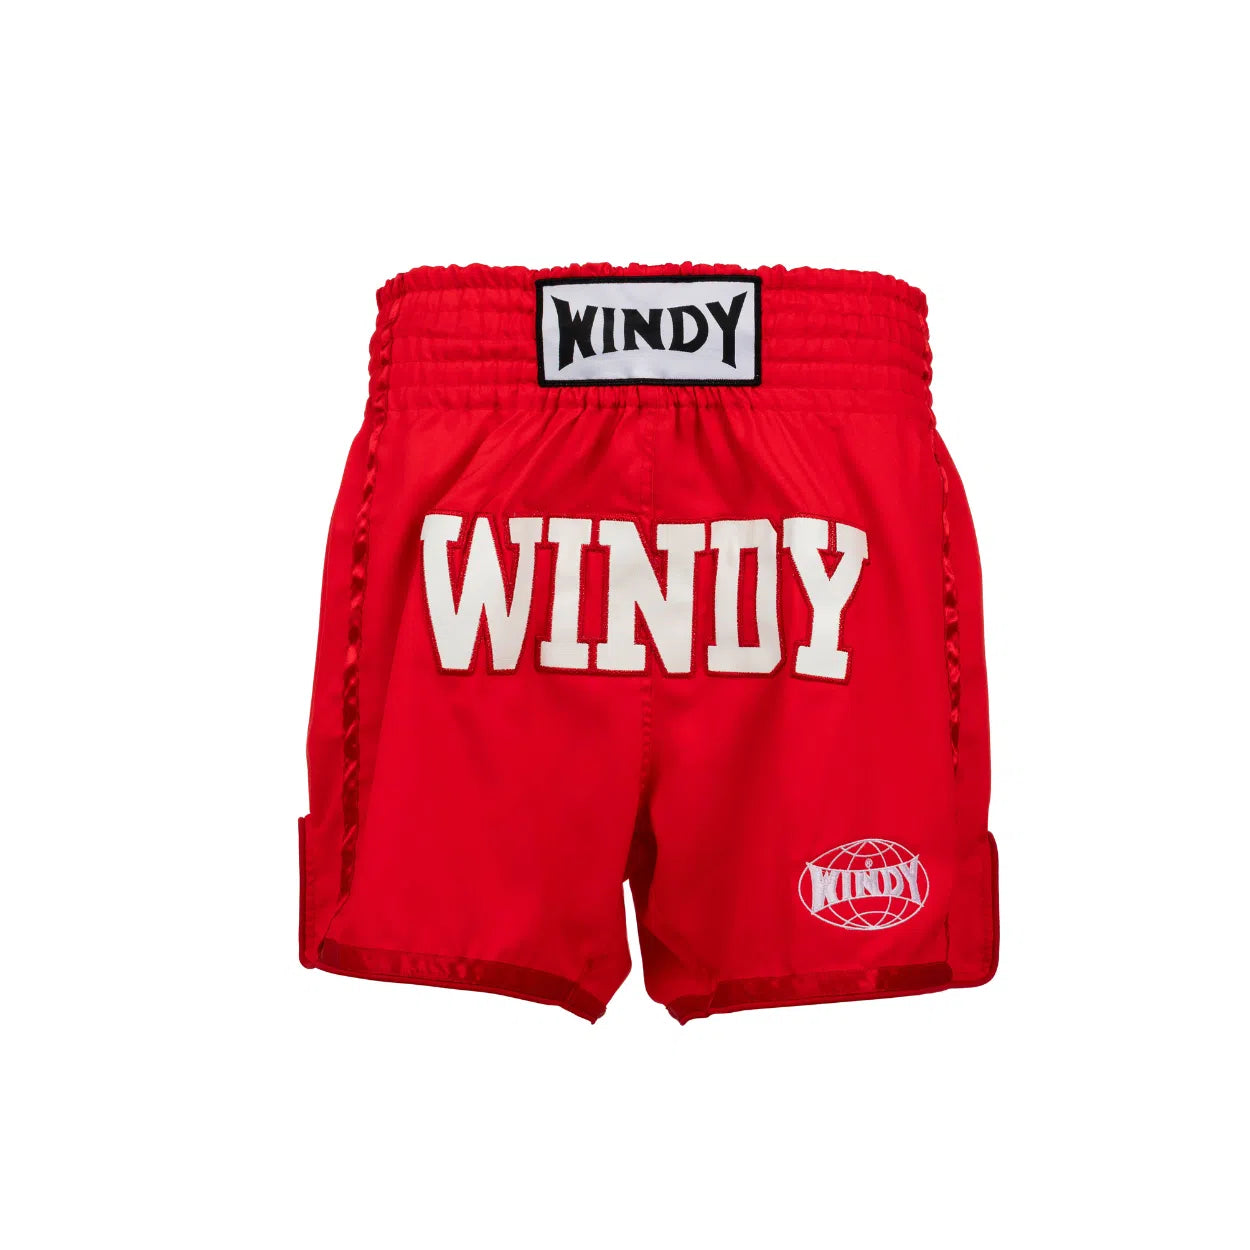 Muay Thai Shorts - Retro - Red